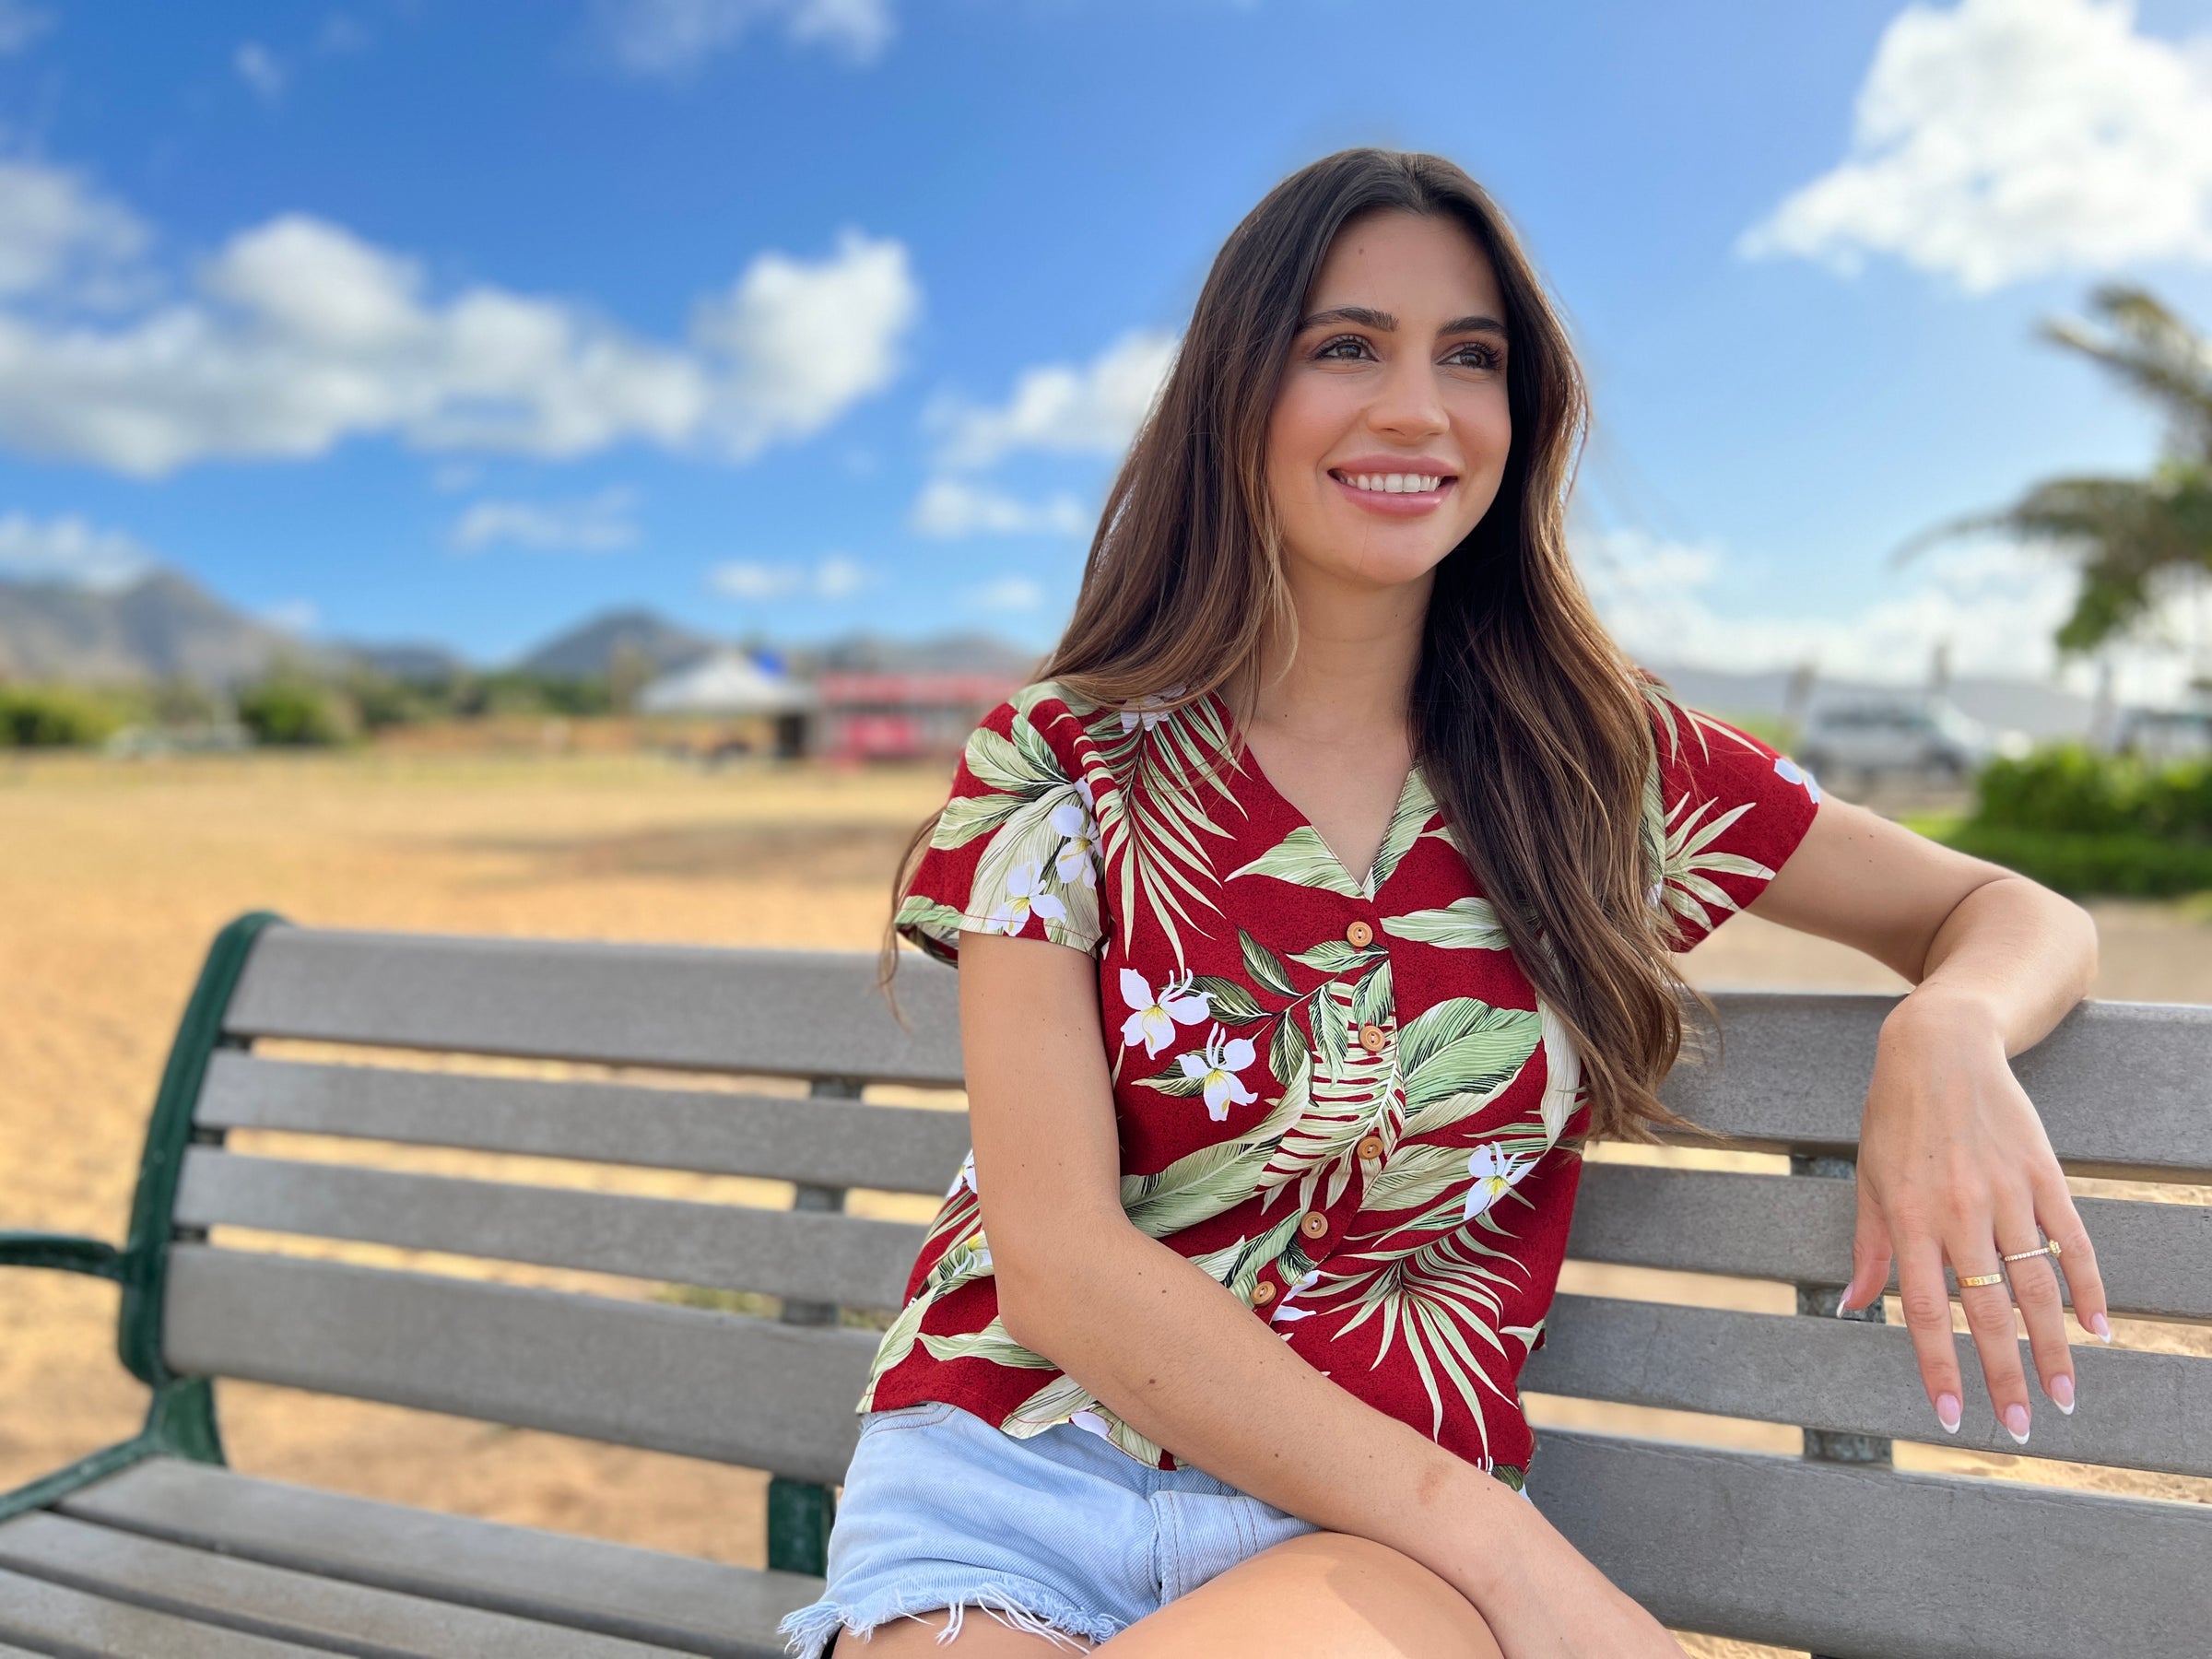 Women's Hawaiian Shirts